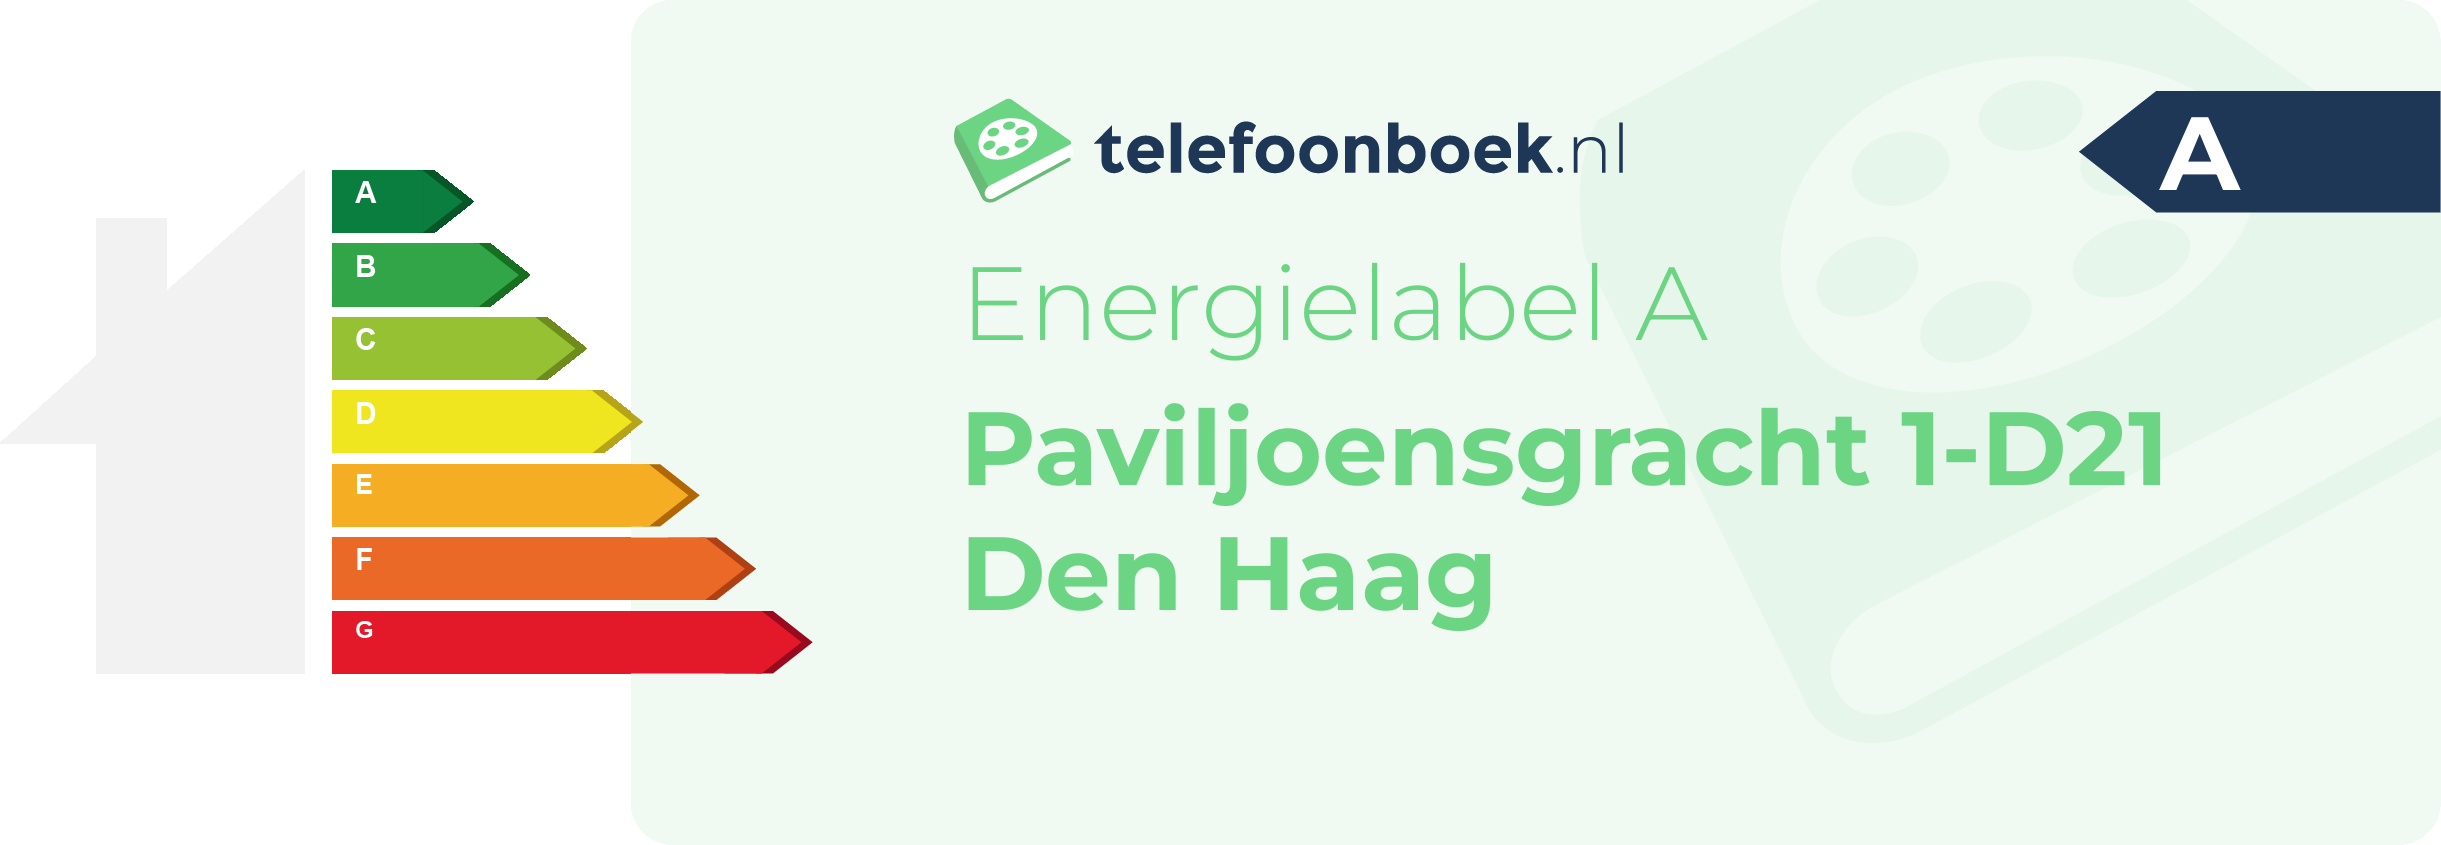 Energielabel Paviljoensgracht 1-D21 Den Haag